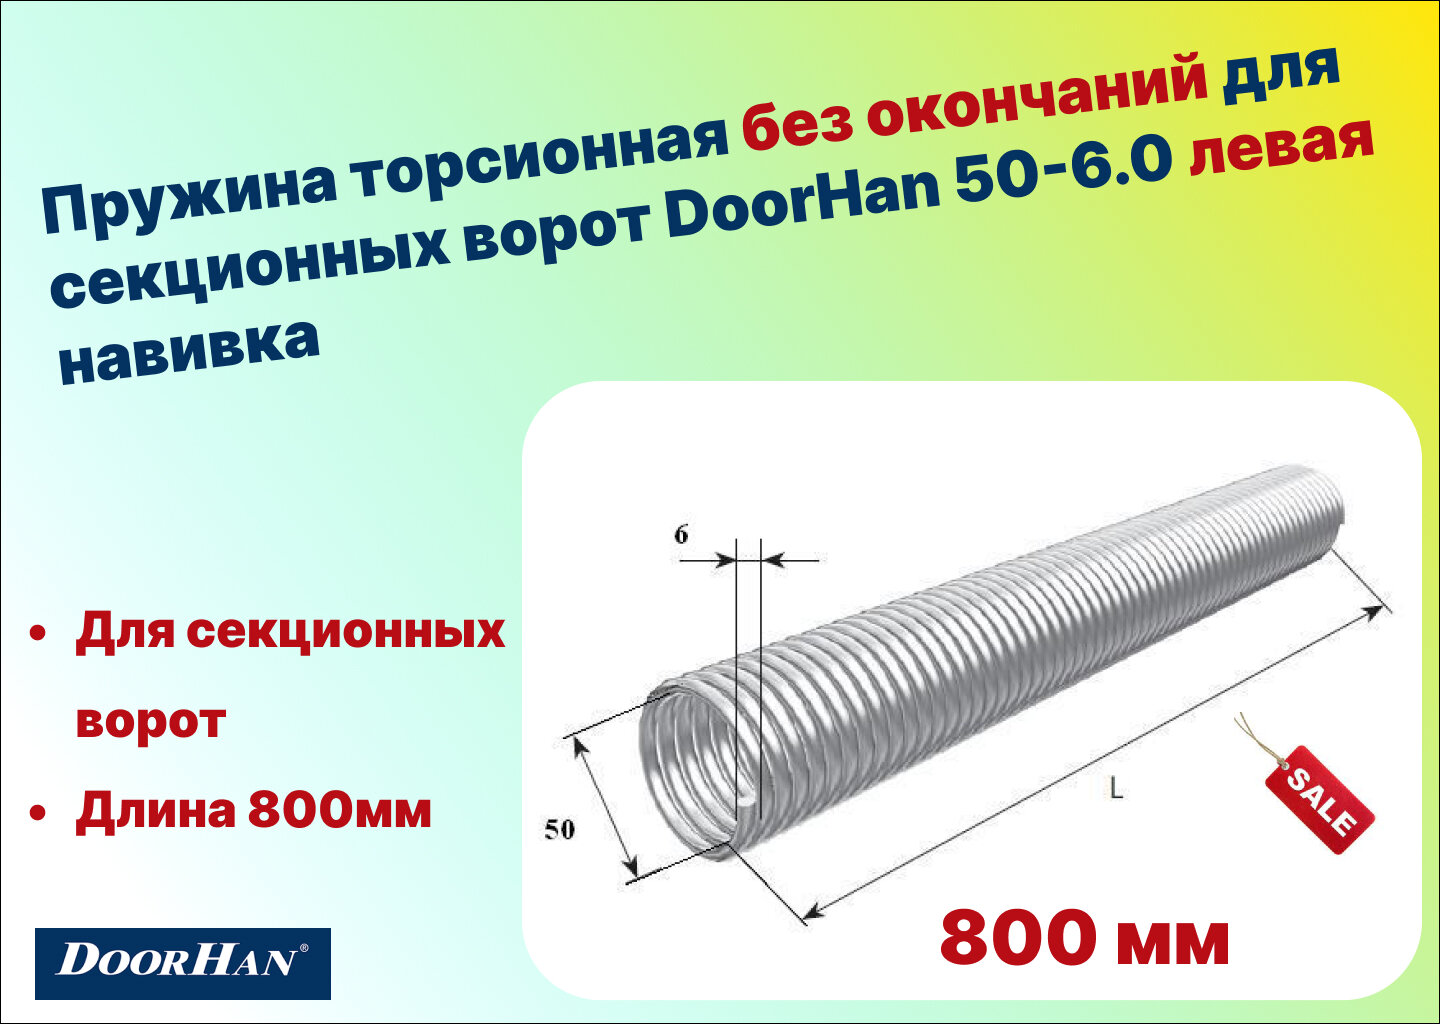 Пружина торсионная без окончаний для секционных ворот DoorHan 50-6.0 левая навивка длина 800 мм (32060/mL/RAL7004 )